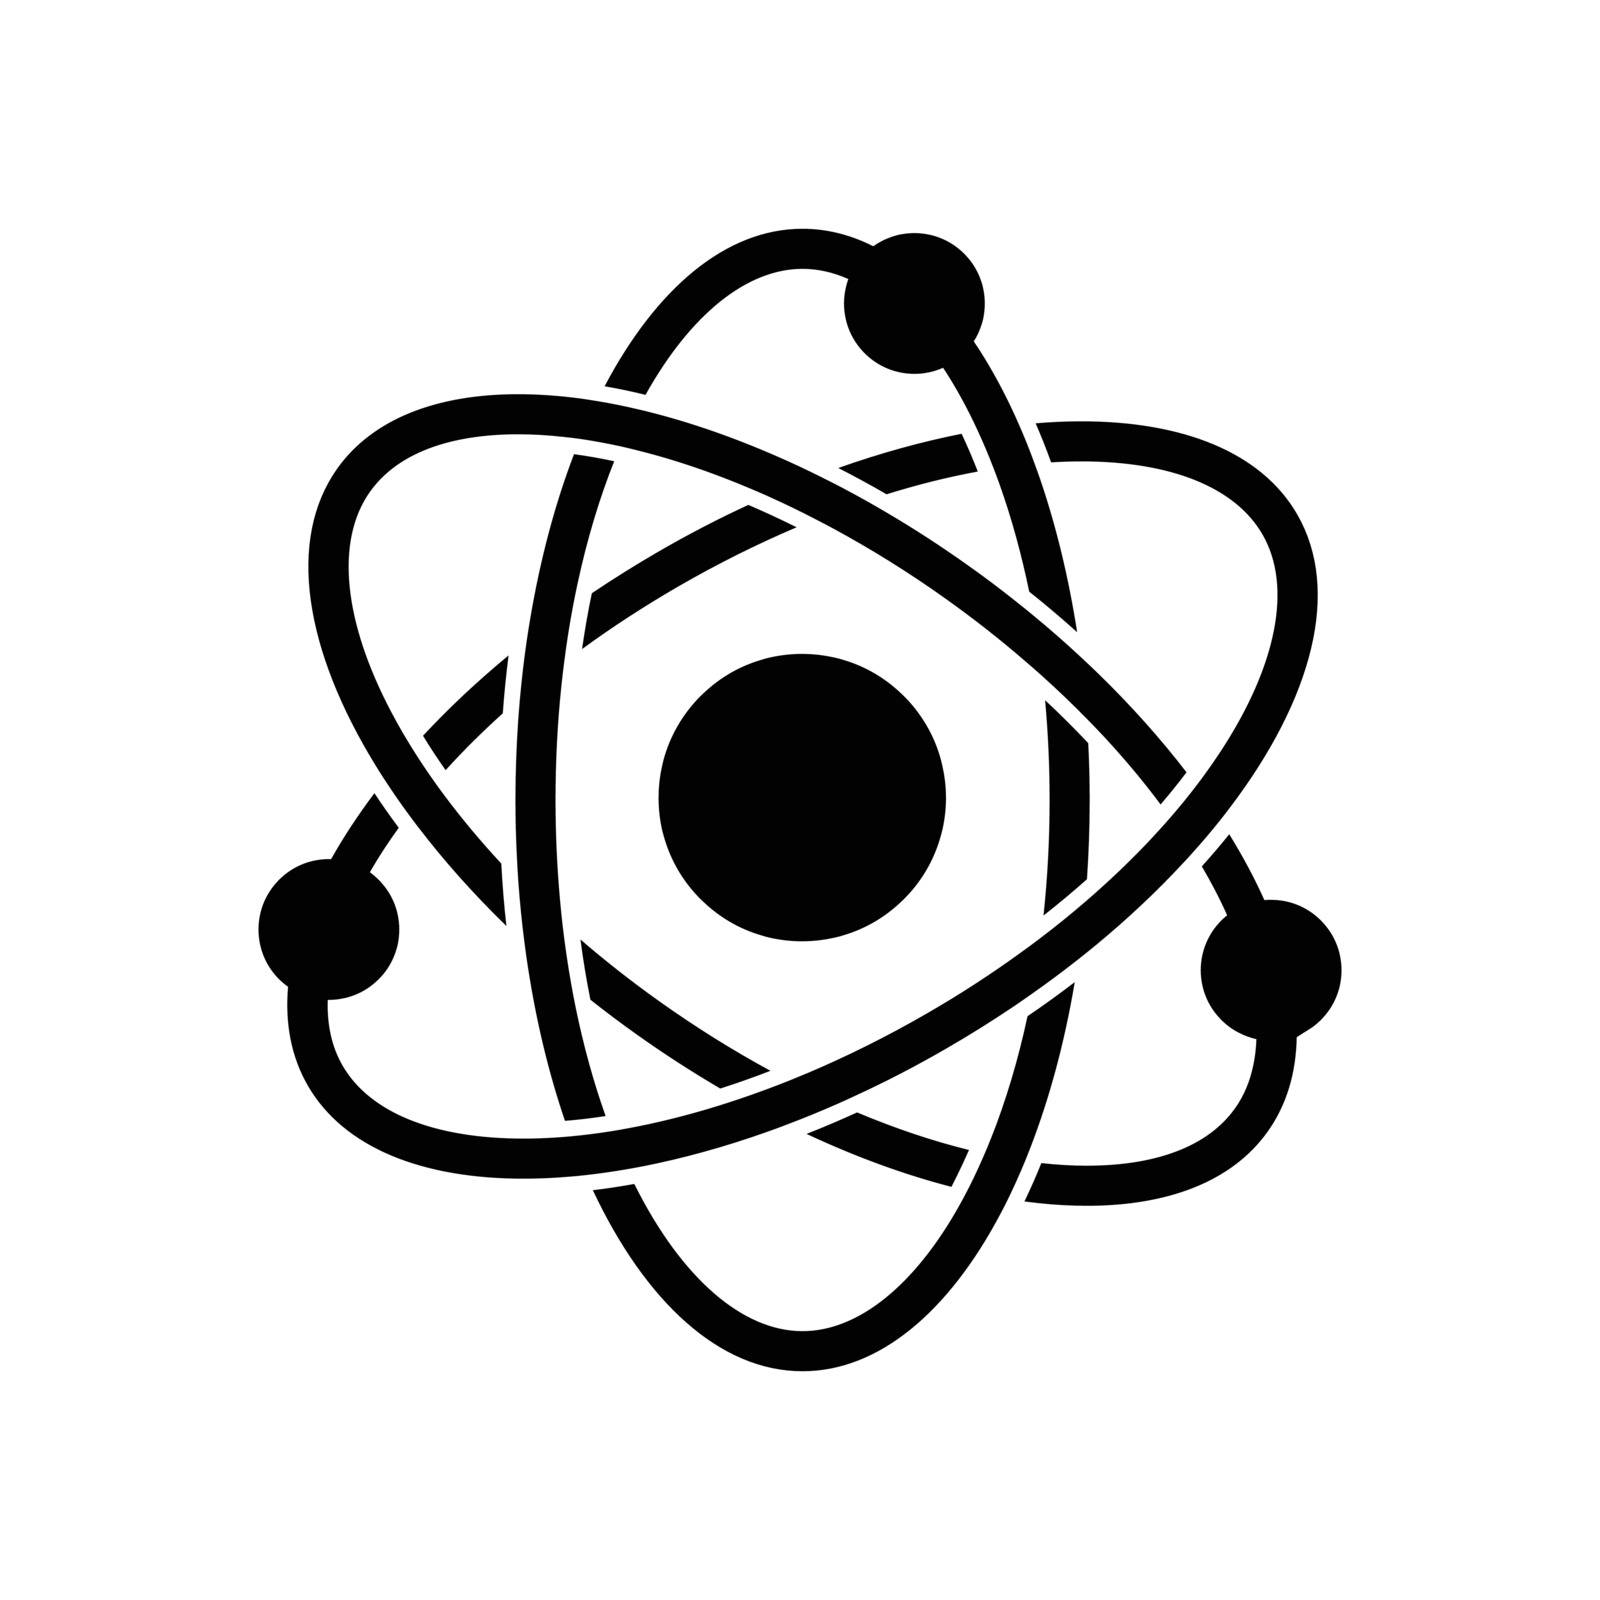  Atom Icon - vector iconic design by solargaria